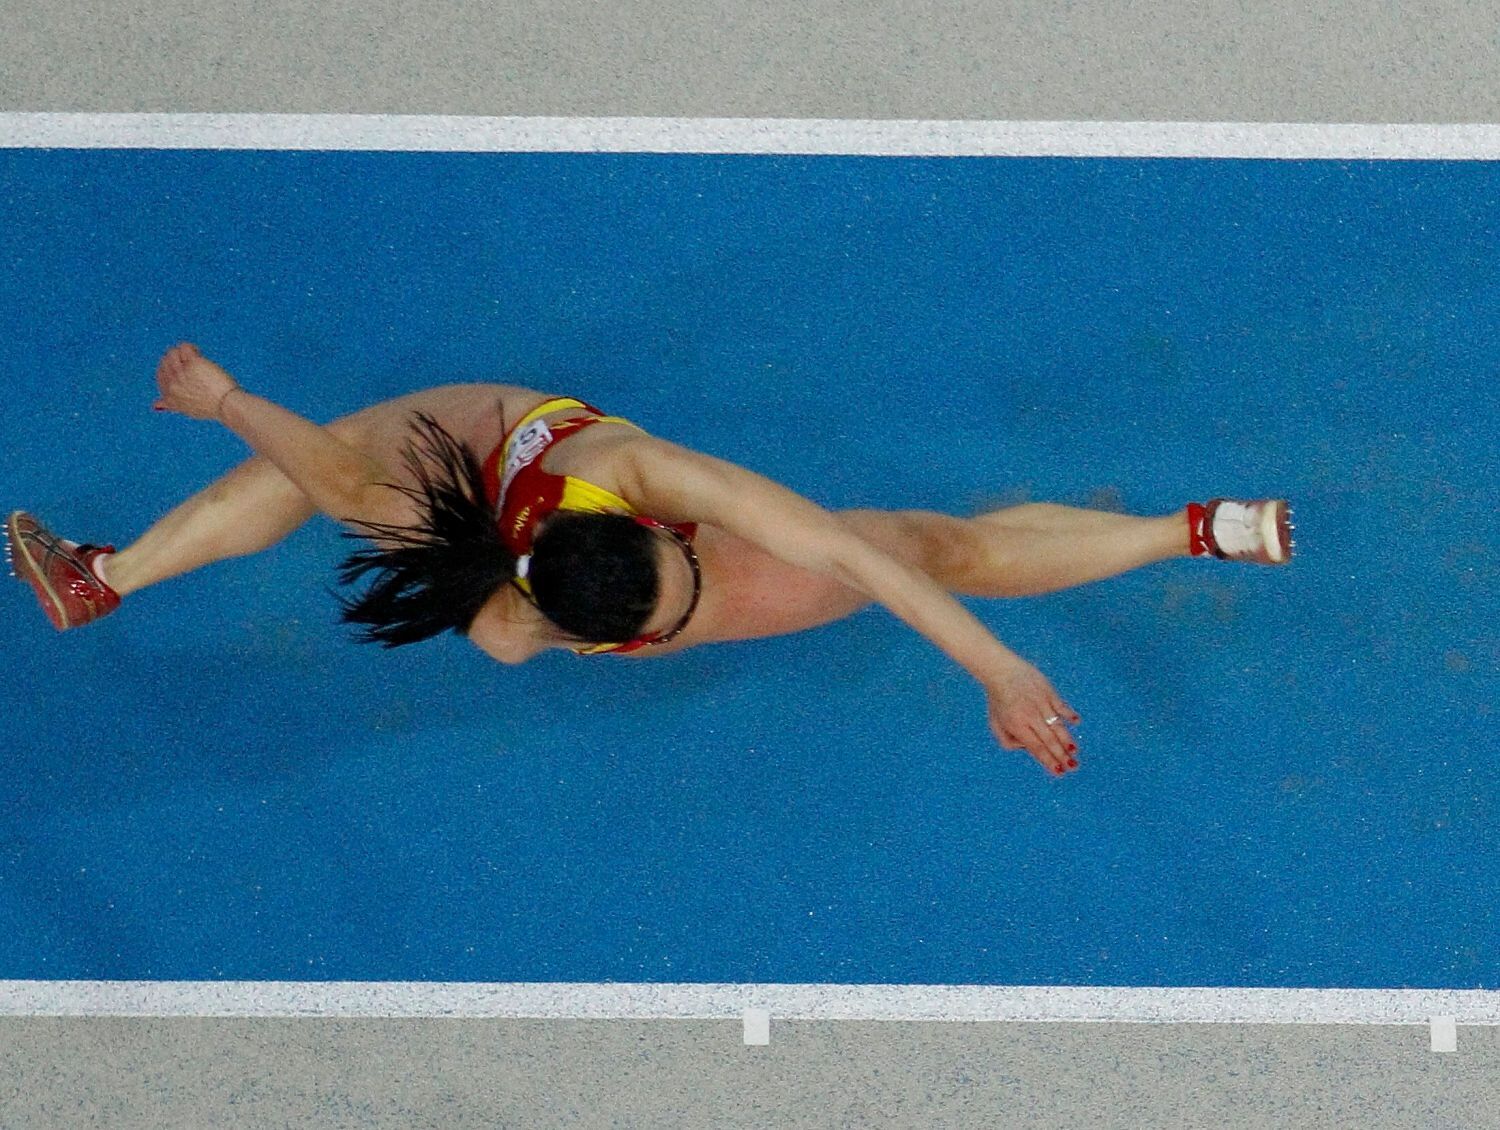 ME v halové atletice 2013, trojskok: Patricia Mamonaová